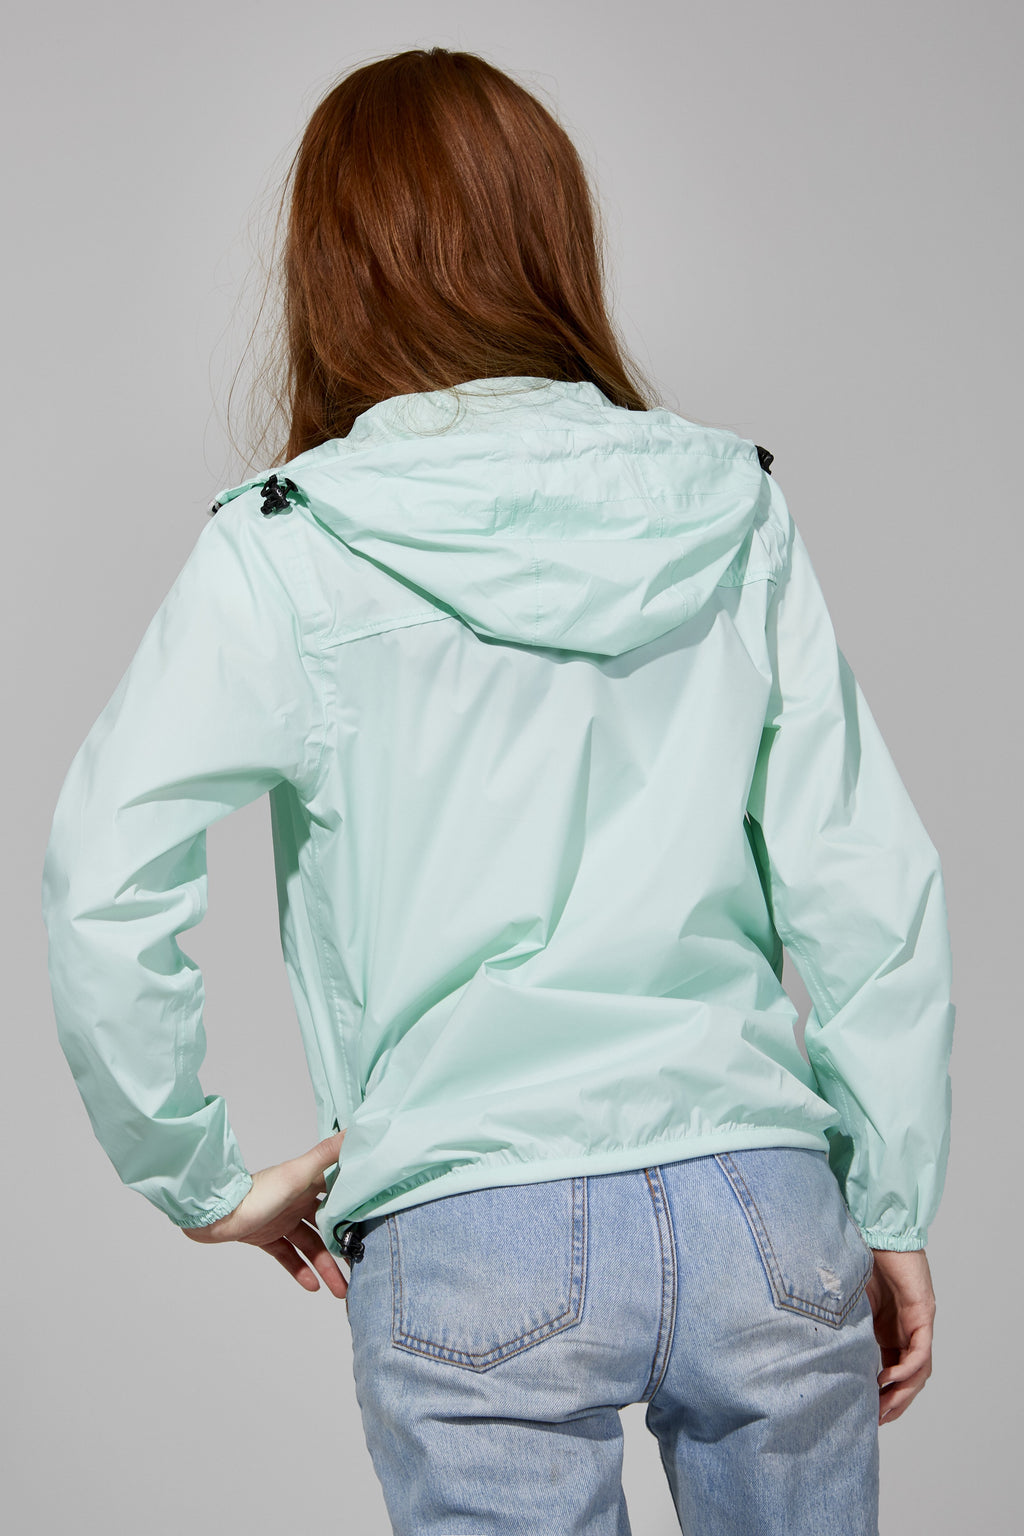 Packable light rain jacket in mint green | Woman rain jacket | O8lifestyle